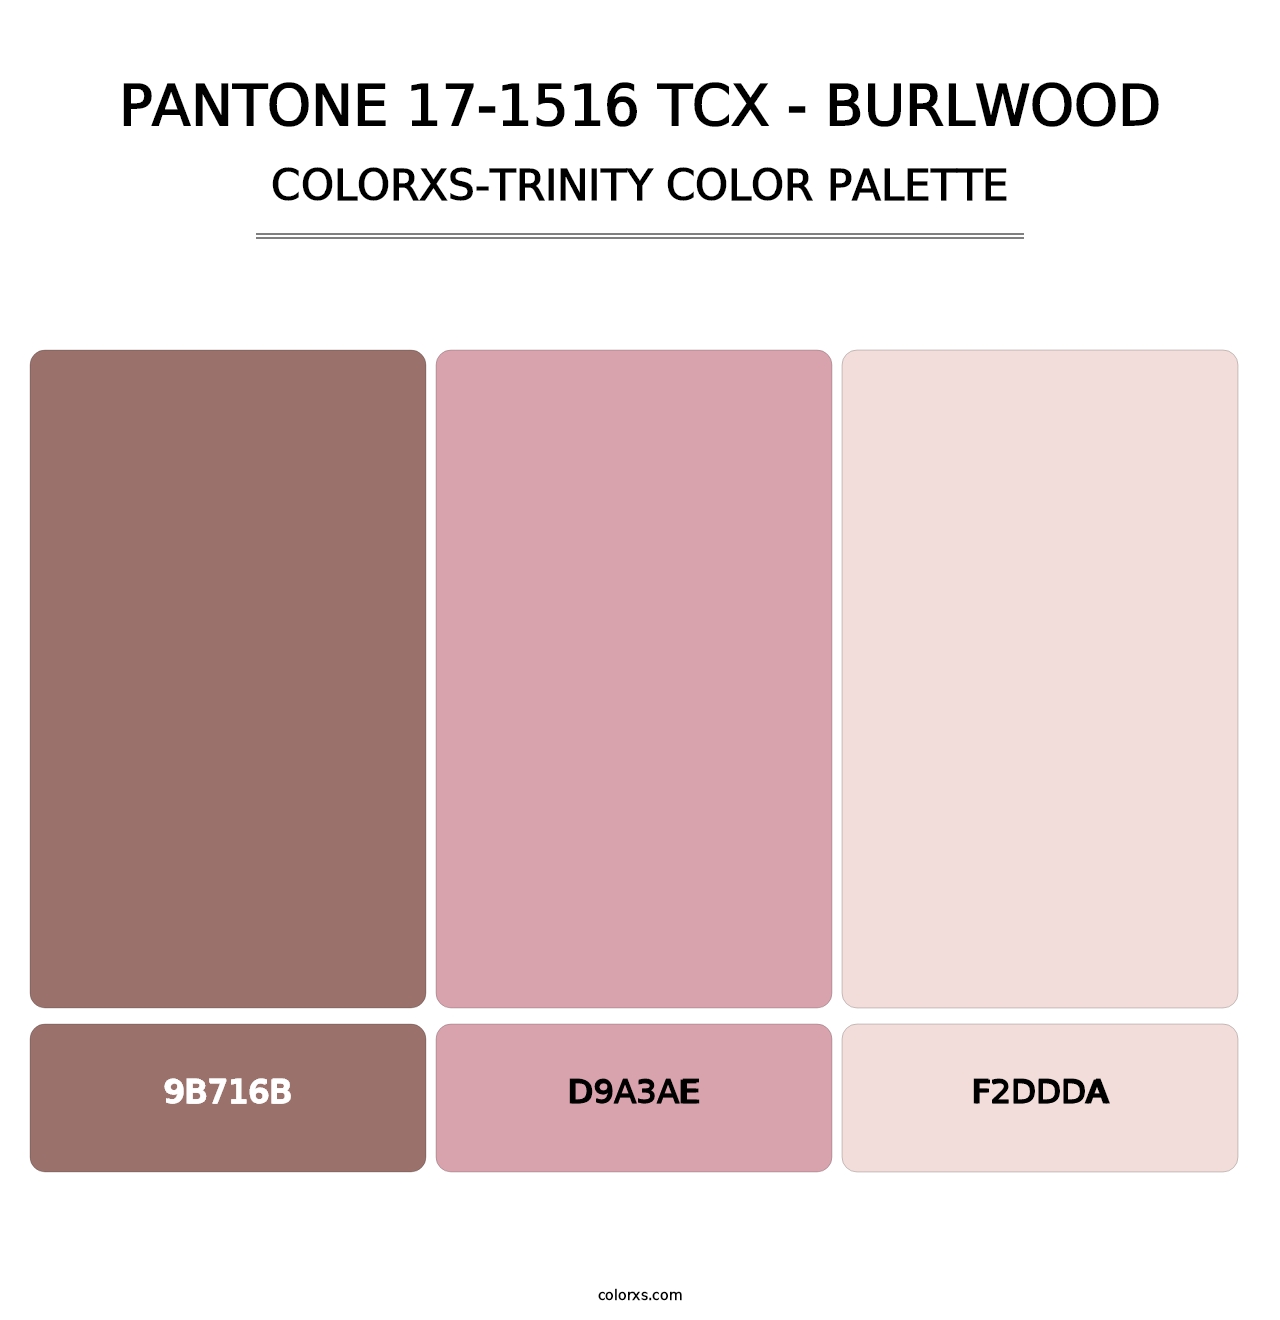 PANTONE 17-1516 TCX - Burlwood - Colorxs Trinity Palette